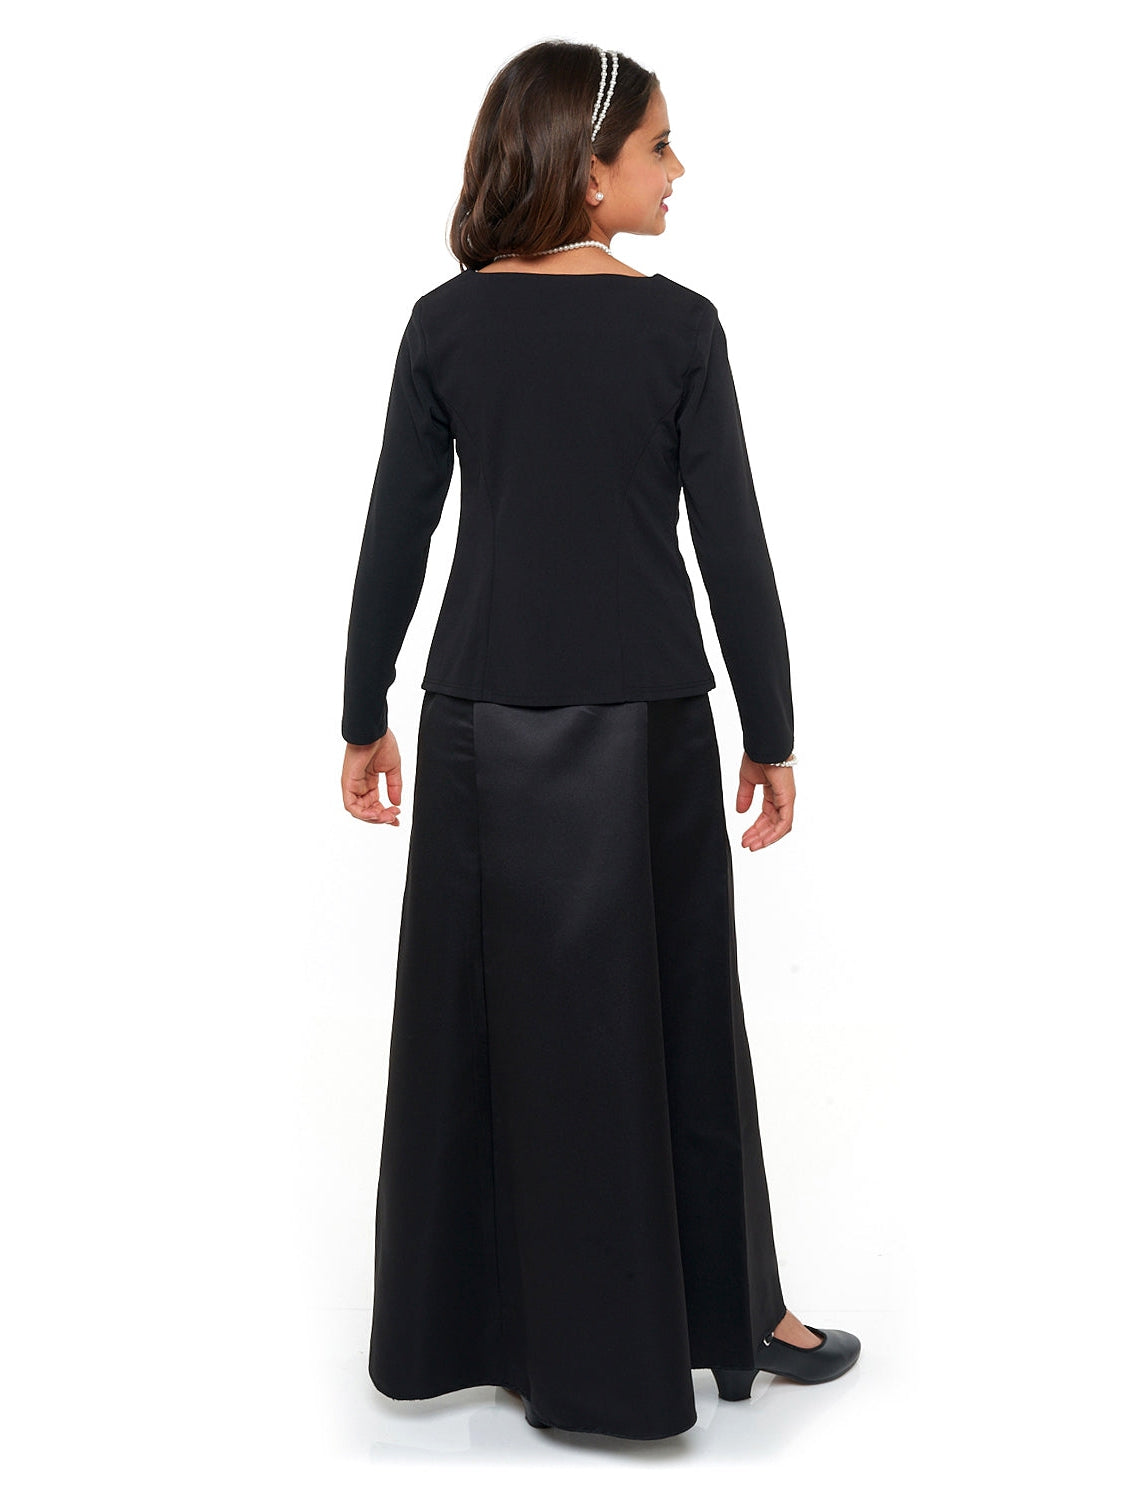 ROSALENA (Style #3220Y) - Satin Floor Length Skirt - Youth